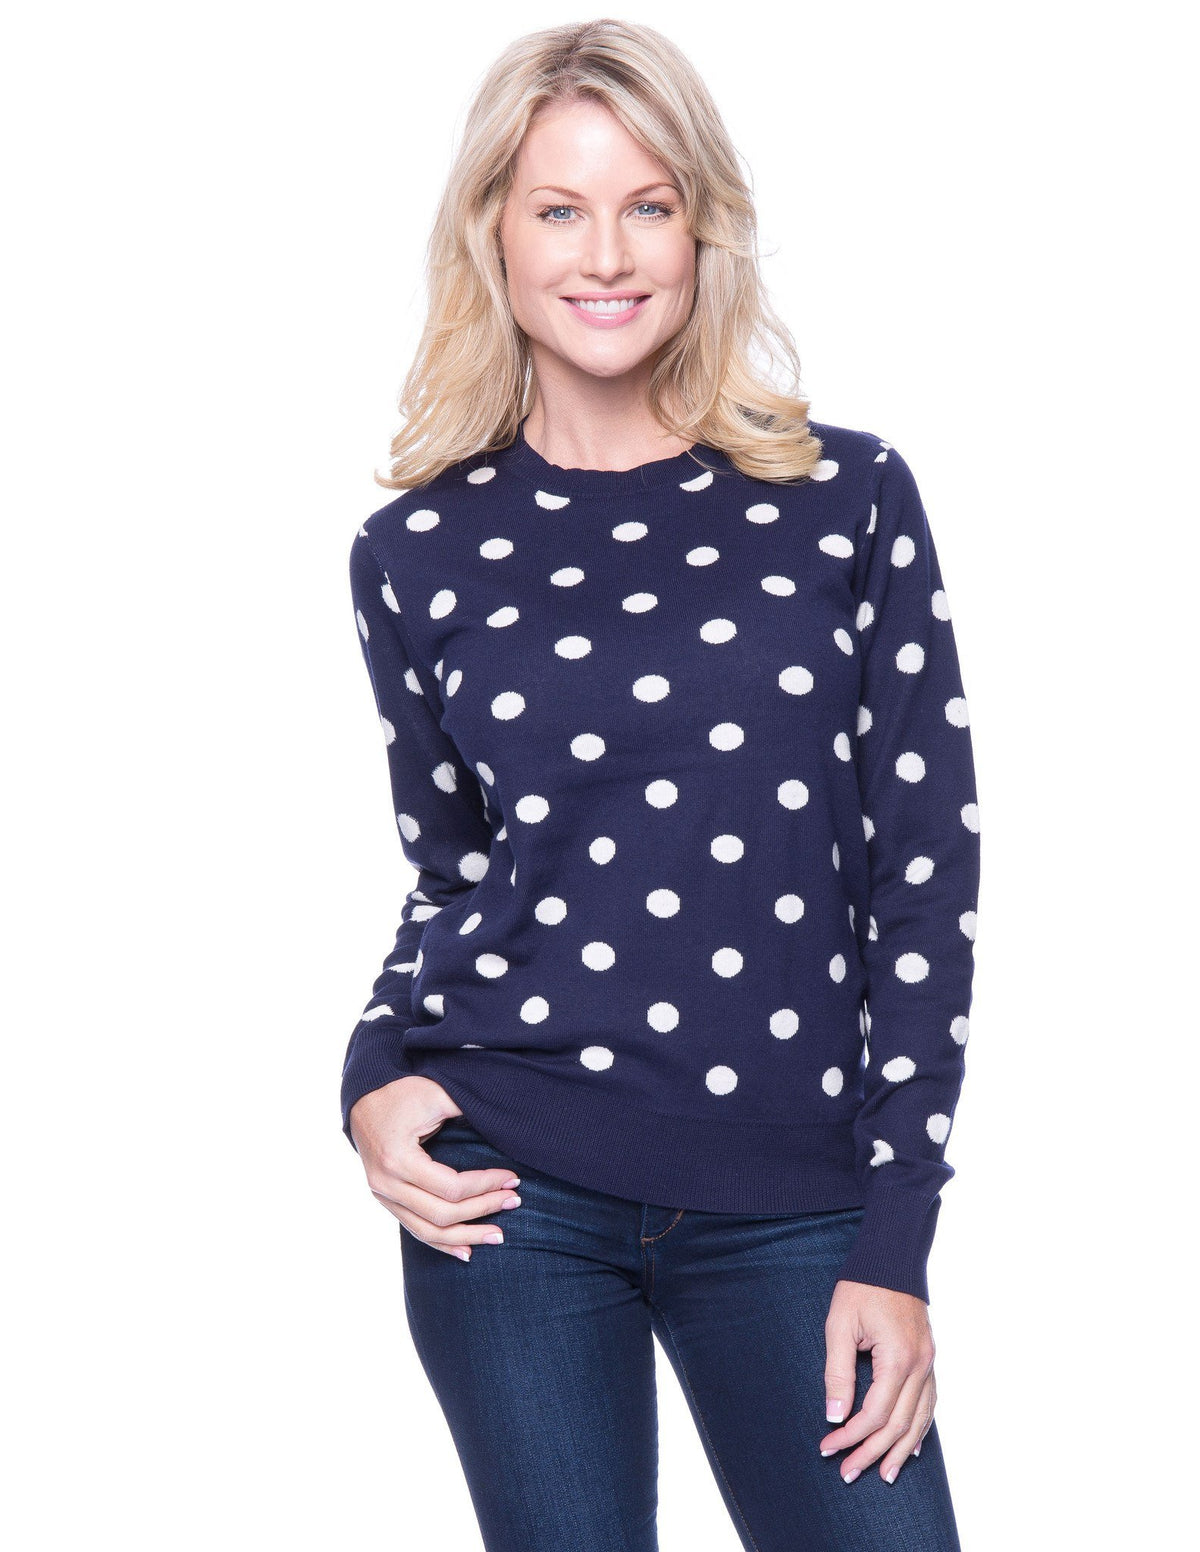 Women's Premium Cotton Crew Neck Sweater - Polka Dots Navy/Ivory